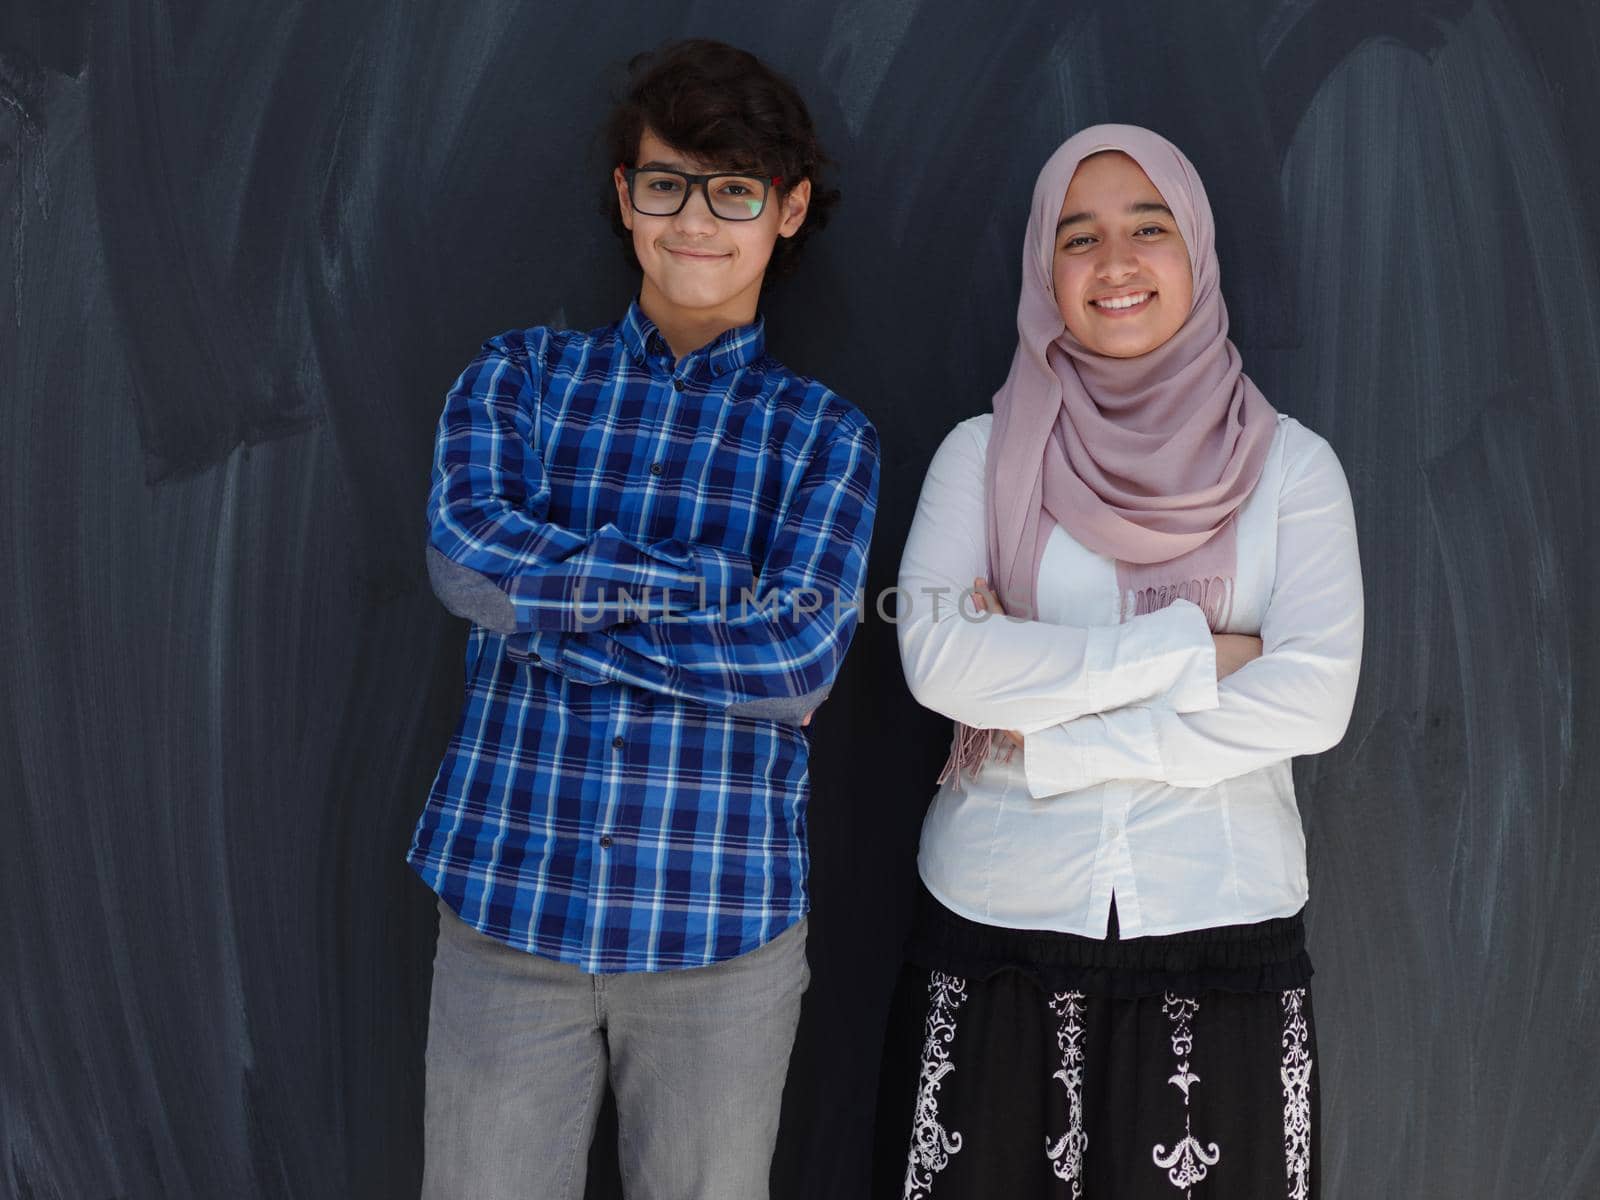 portrait of smart looking arab teens  against black chalkboard  background in school